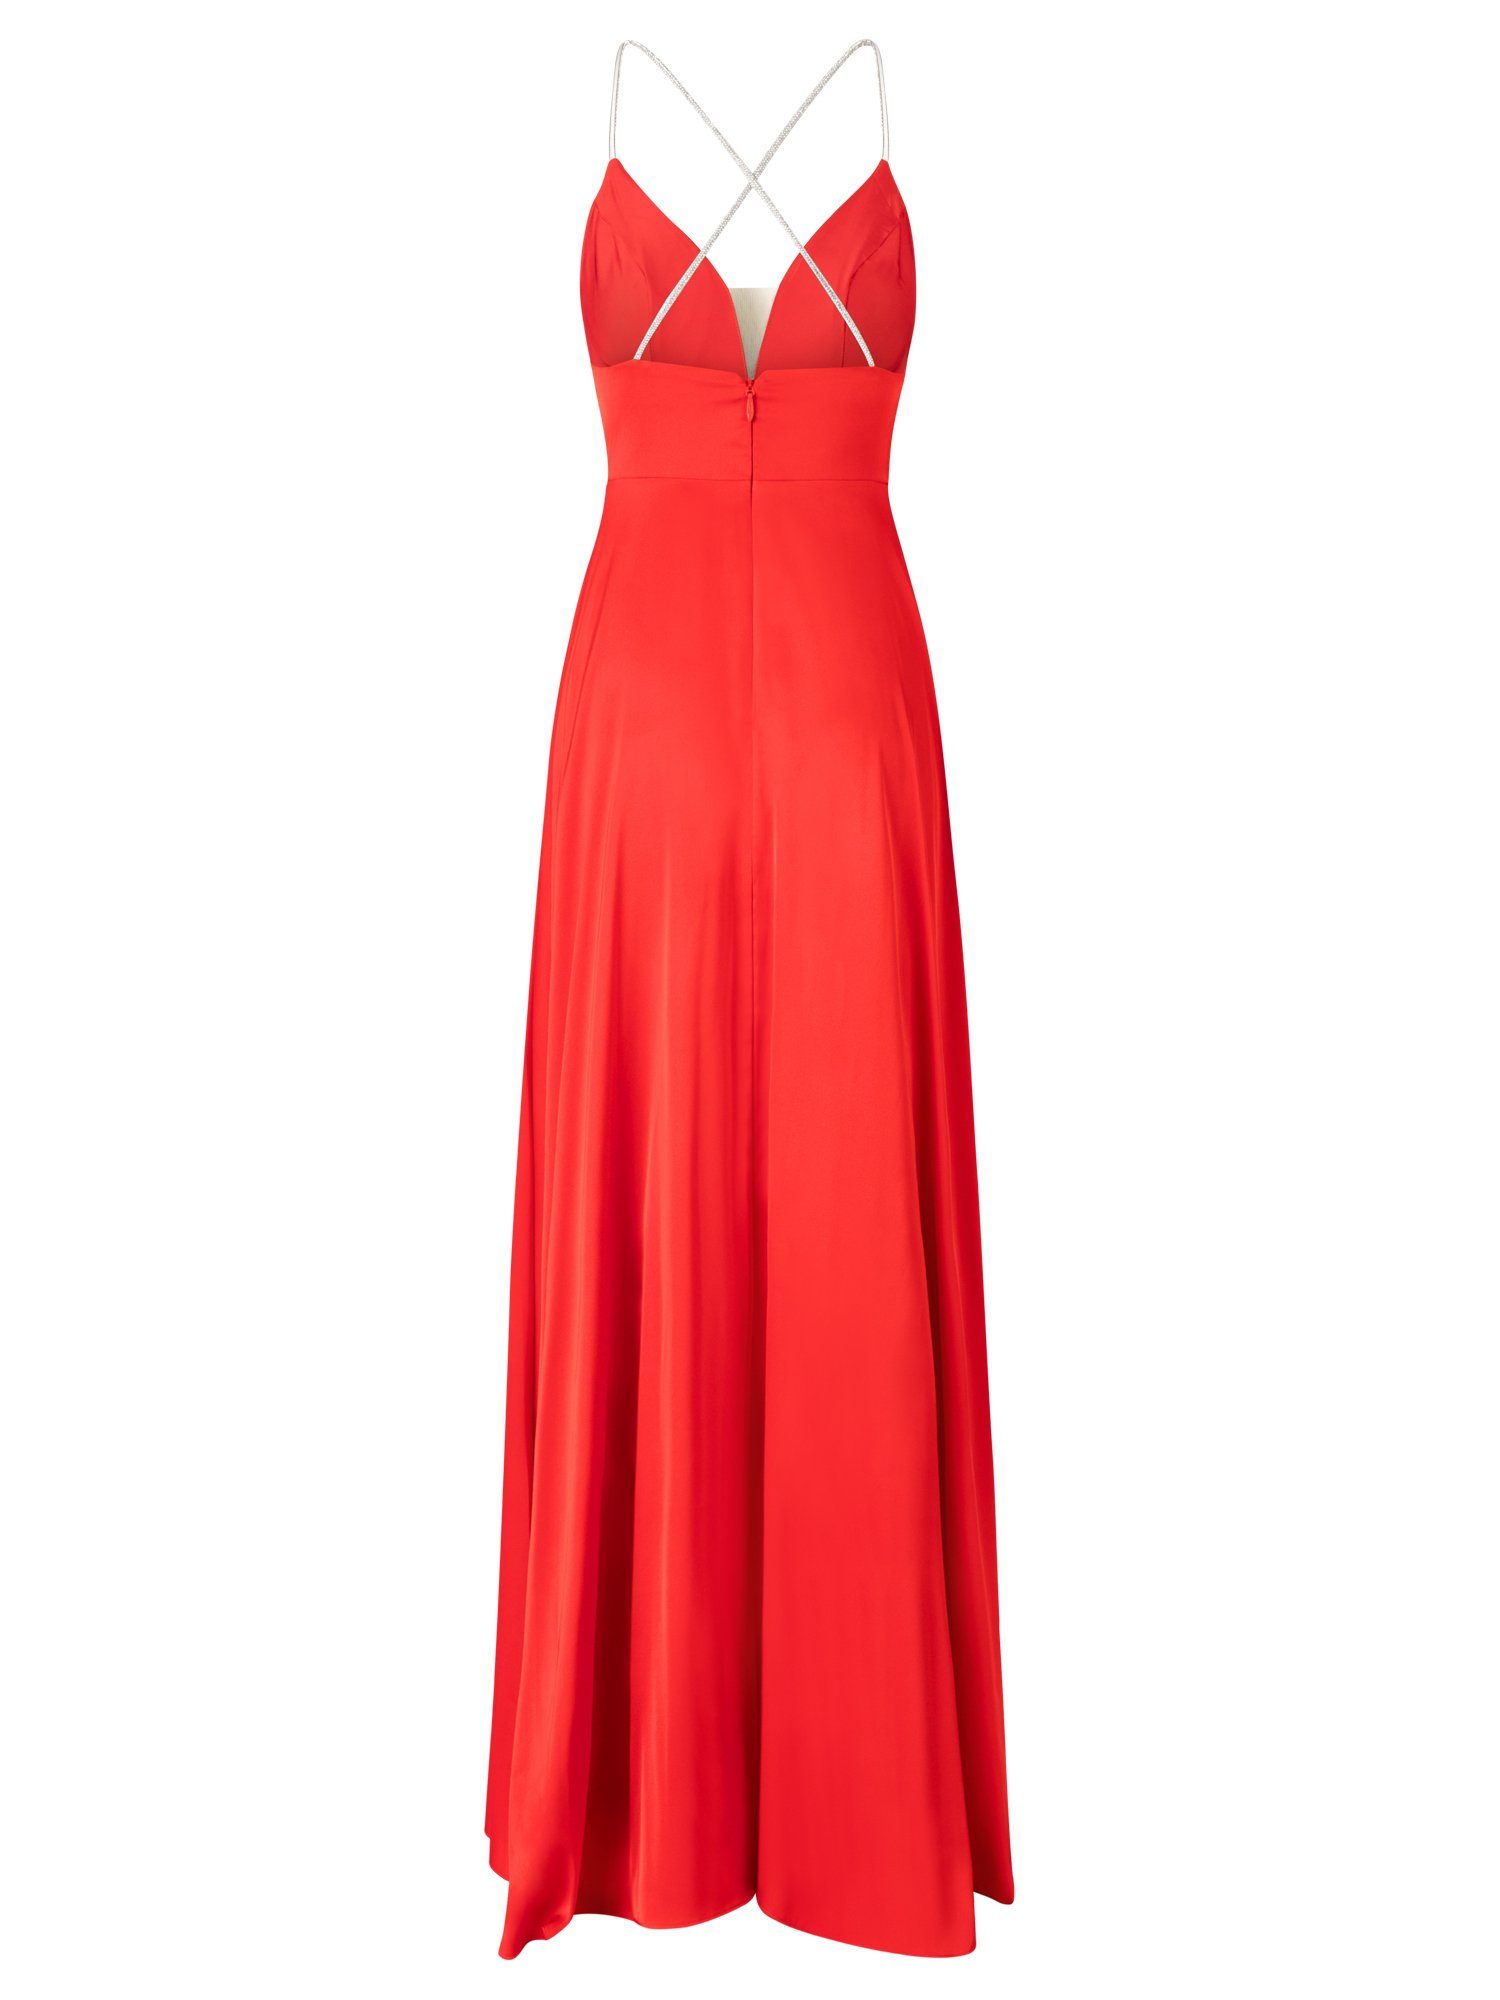 Apart Abendkleid Stil rot mit elegantem